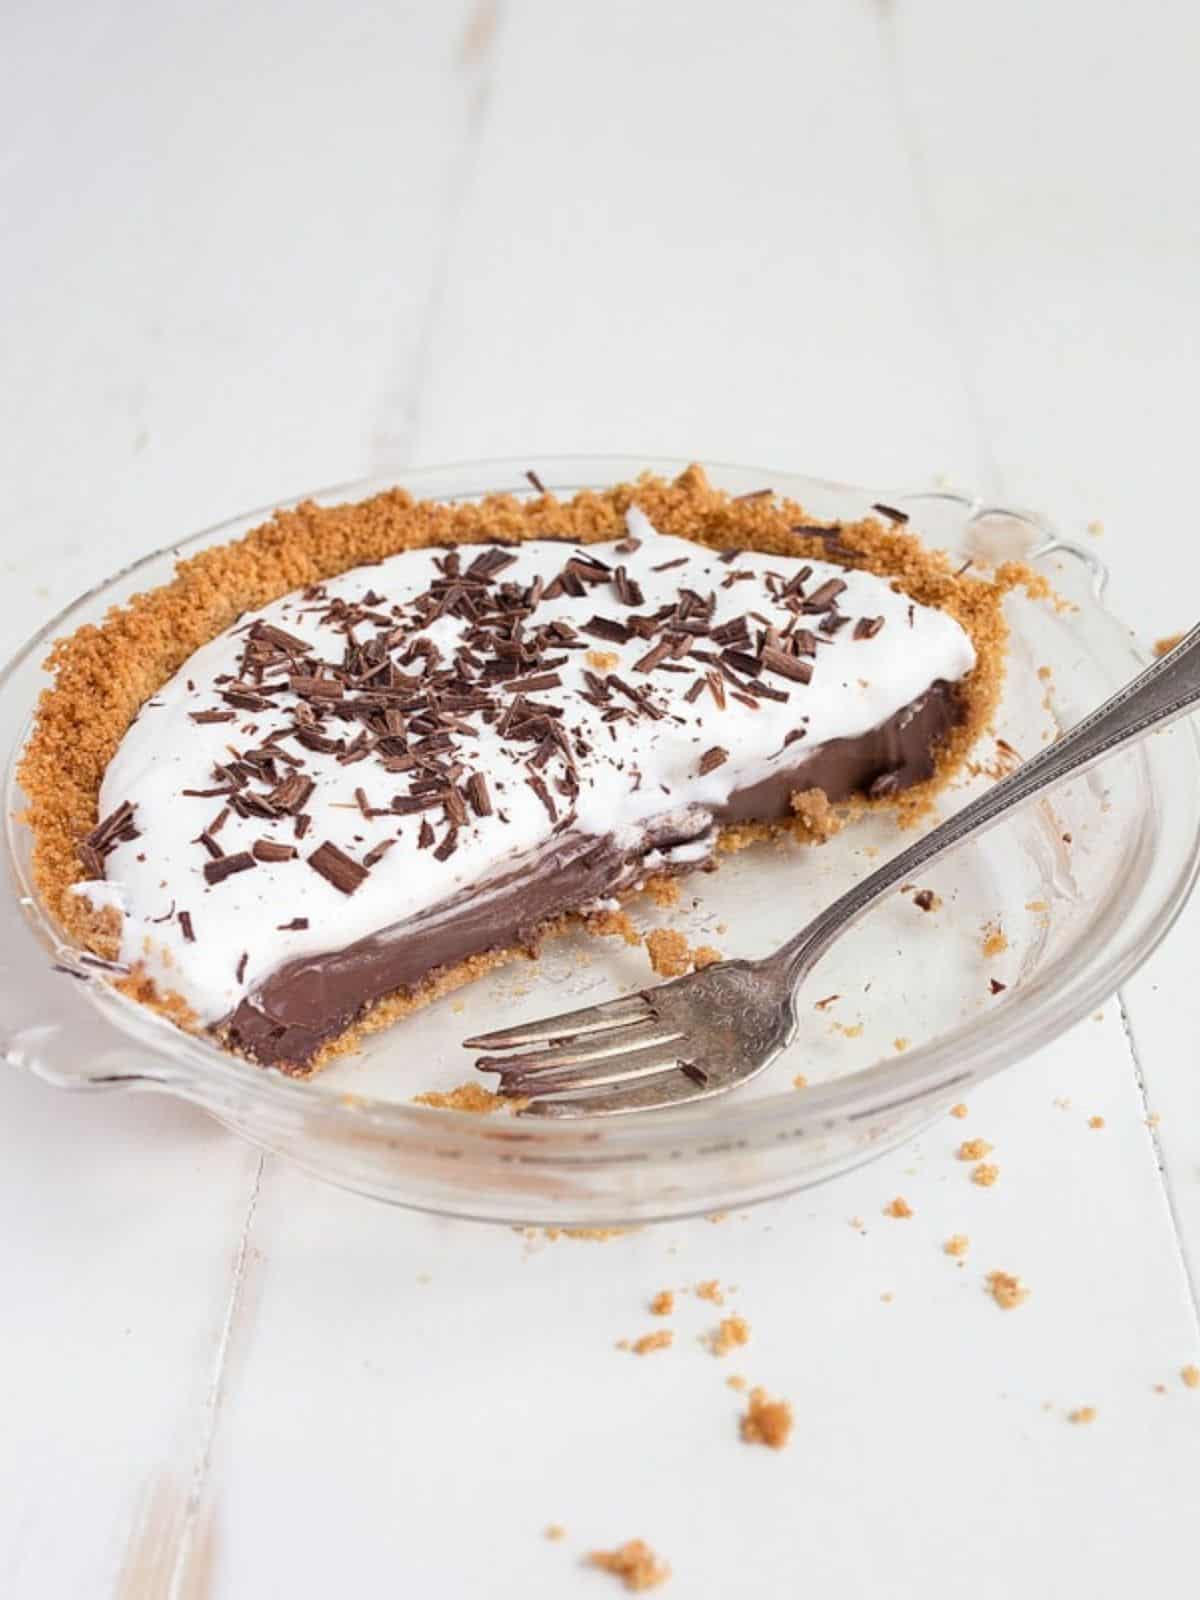 https://www.dessertfortwo.com/wp-content/uploads/2021/03/Chocolate-Cream-Pie-2.jpg